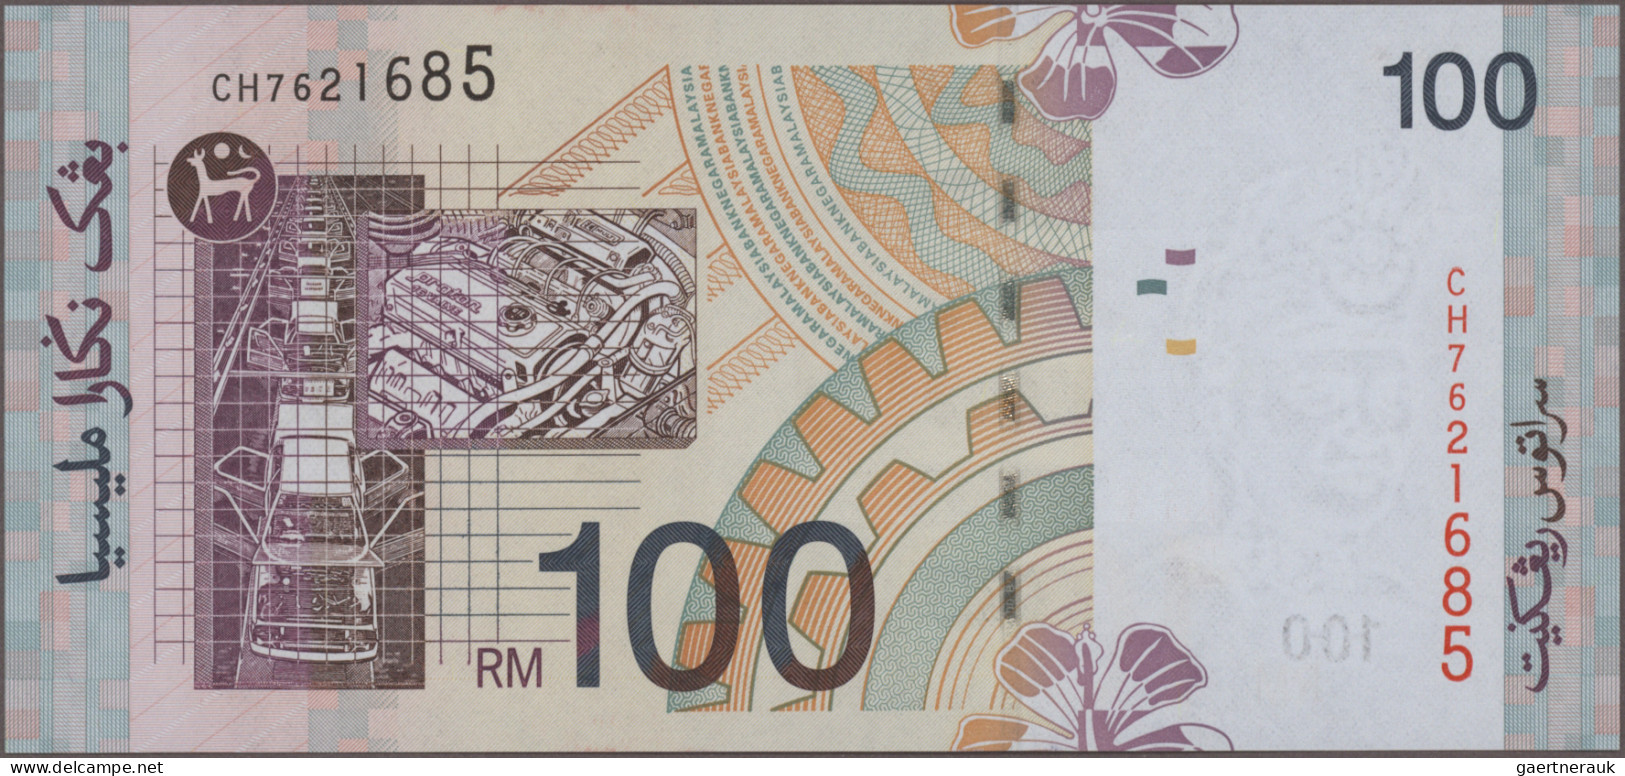 Malaysia: Bank Negara Malaysia, Lot With 7 Banknotes, Series 1999-2011, With 1, - Malesia